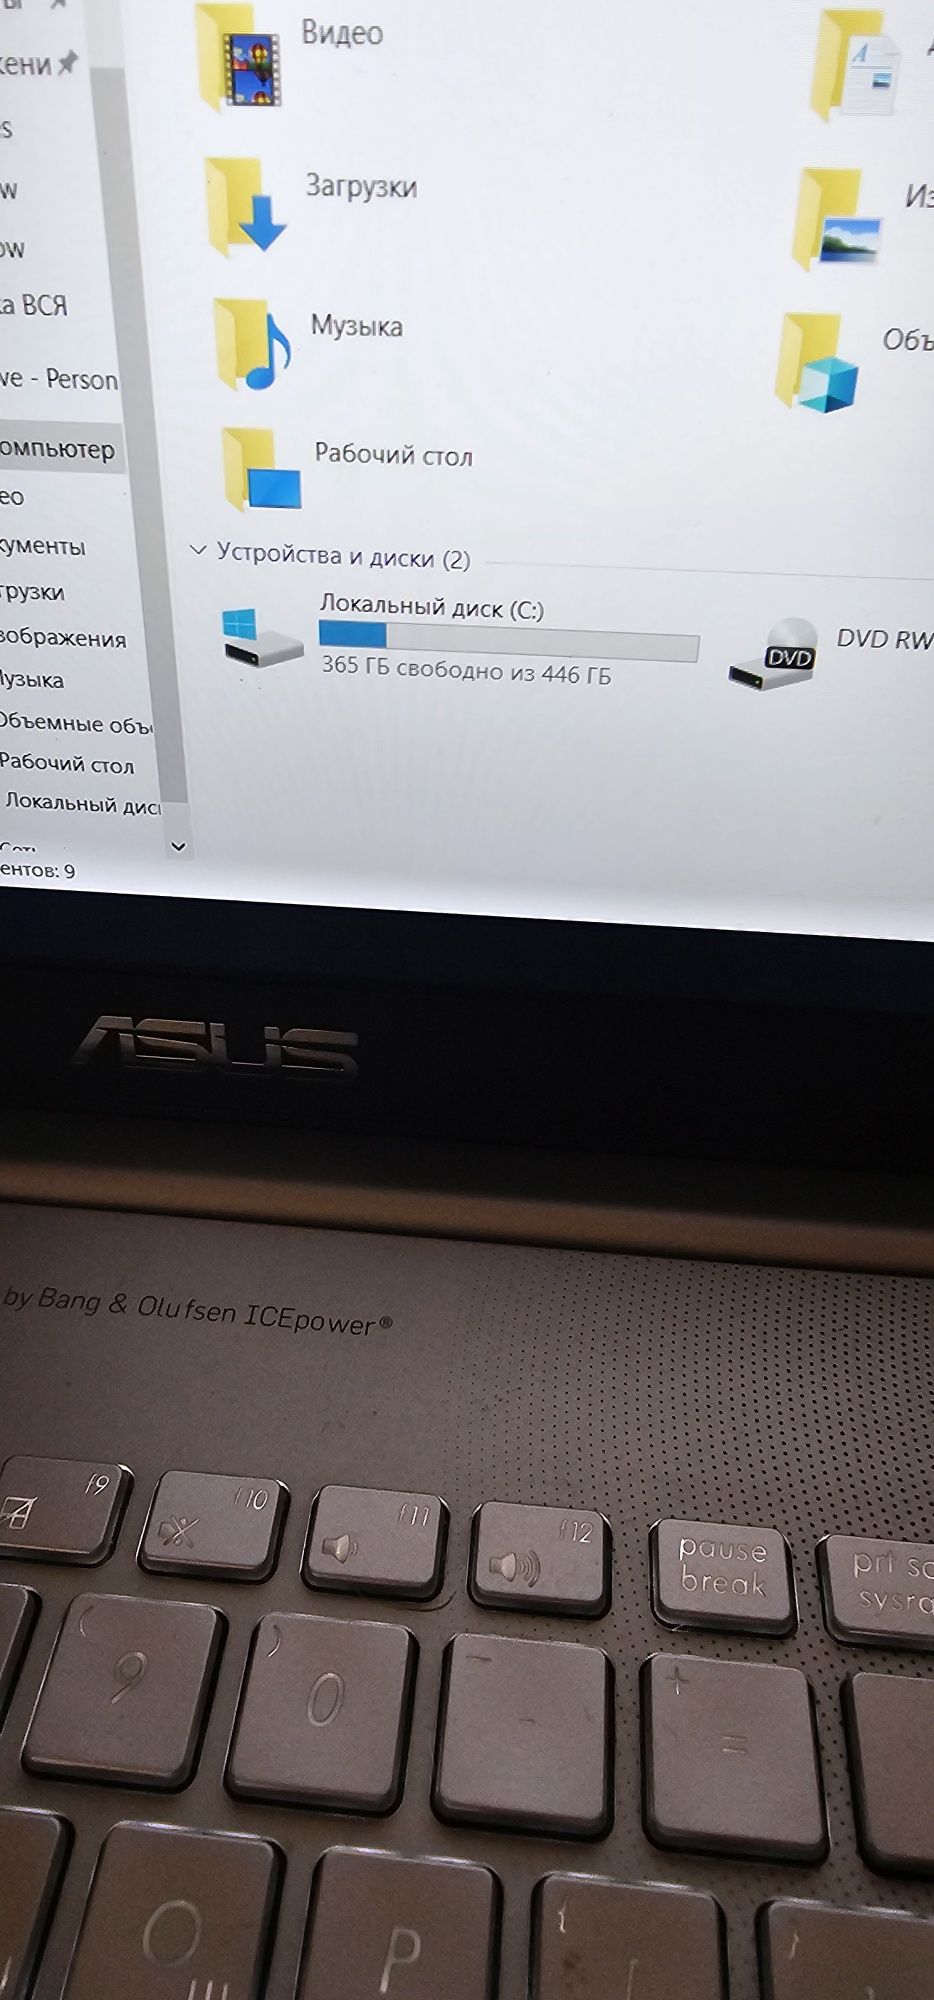 Продам ноутбук ASUS N550J